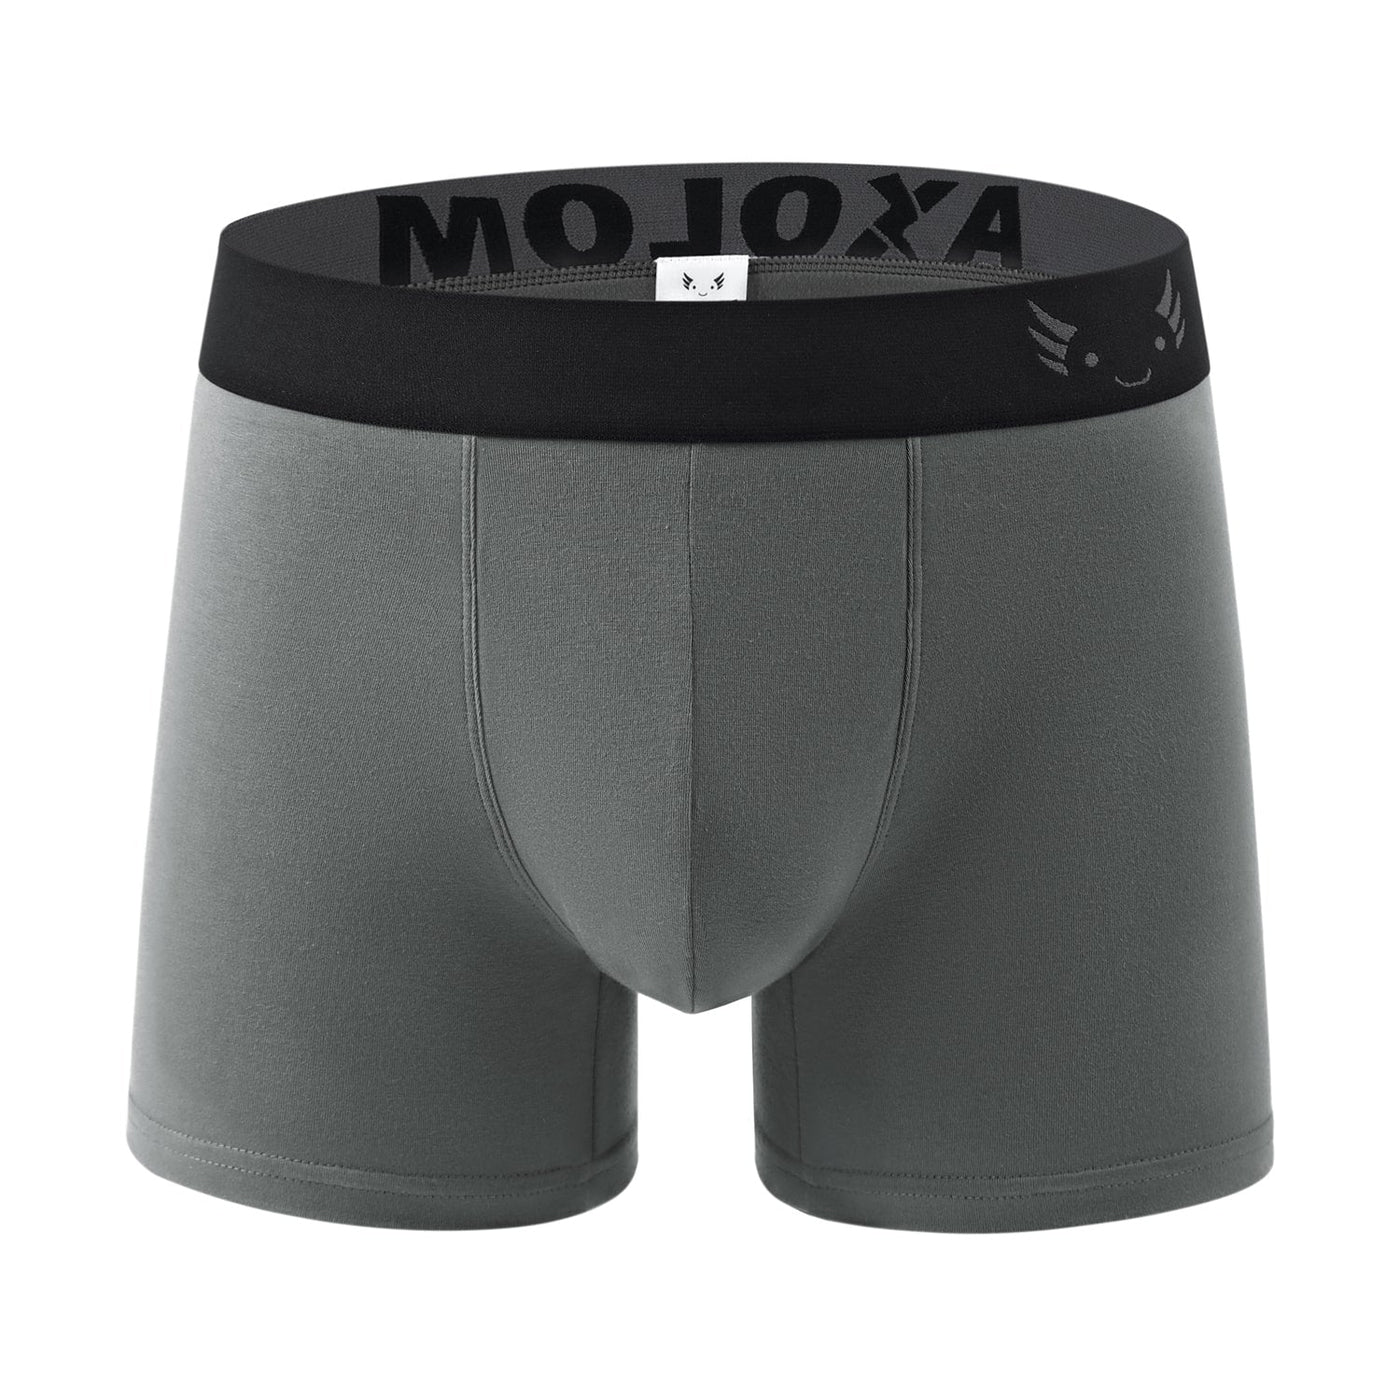 FTM Trans Packing Underwear Gray Boxer